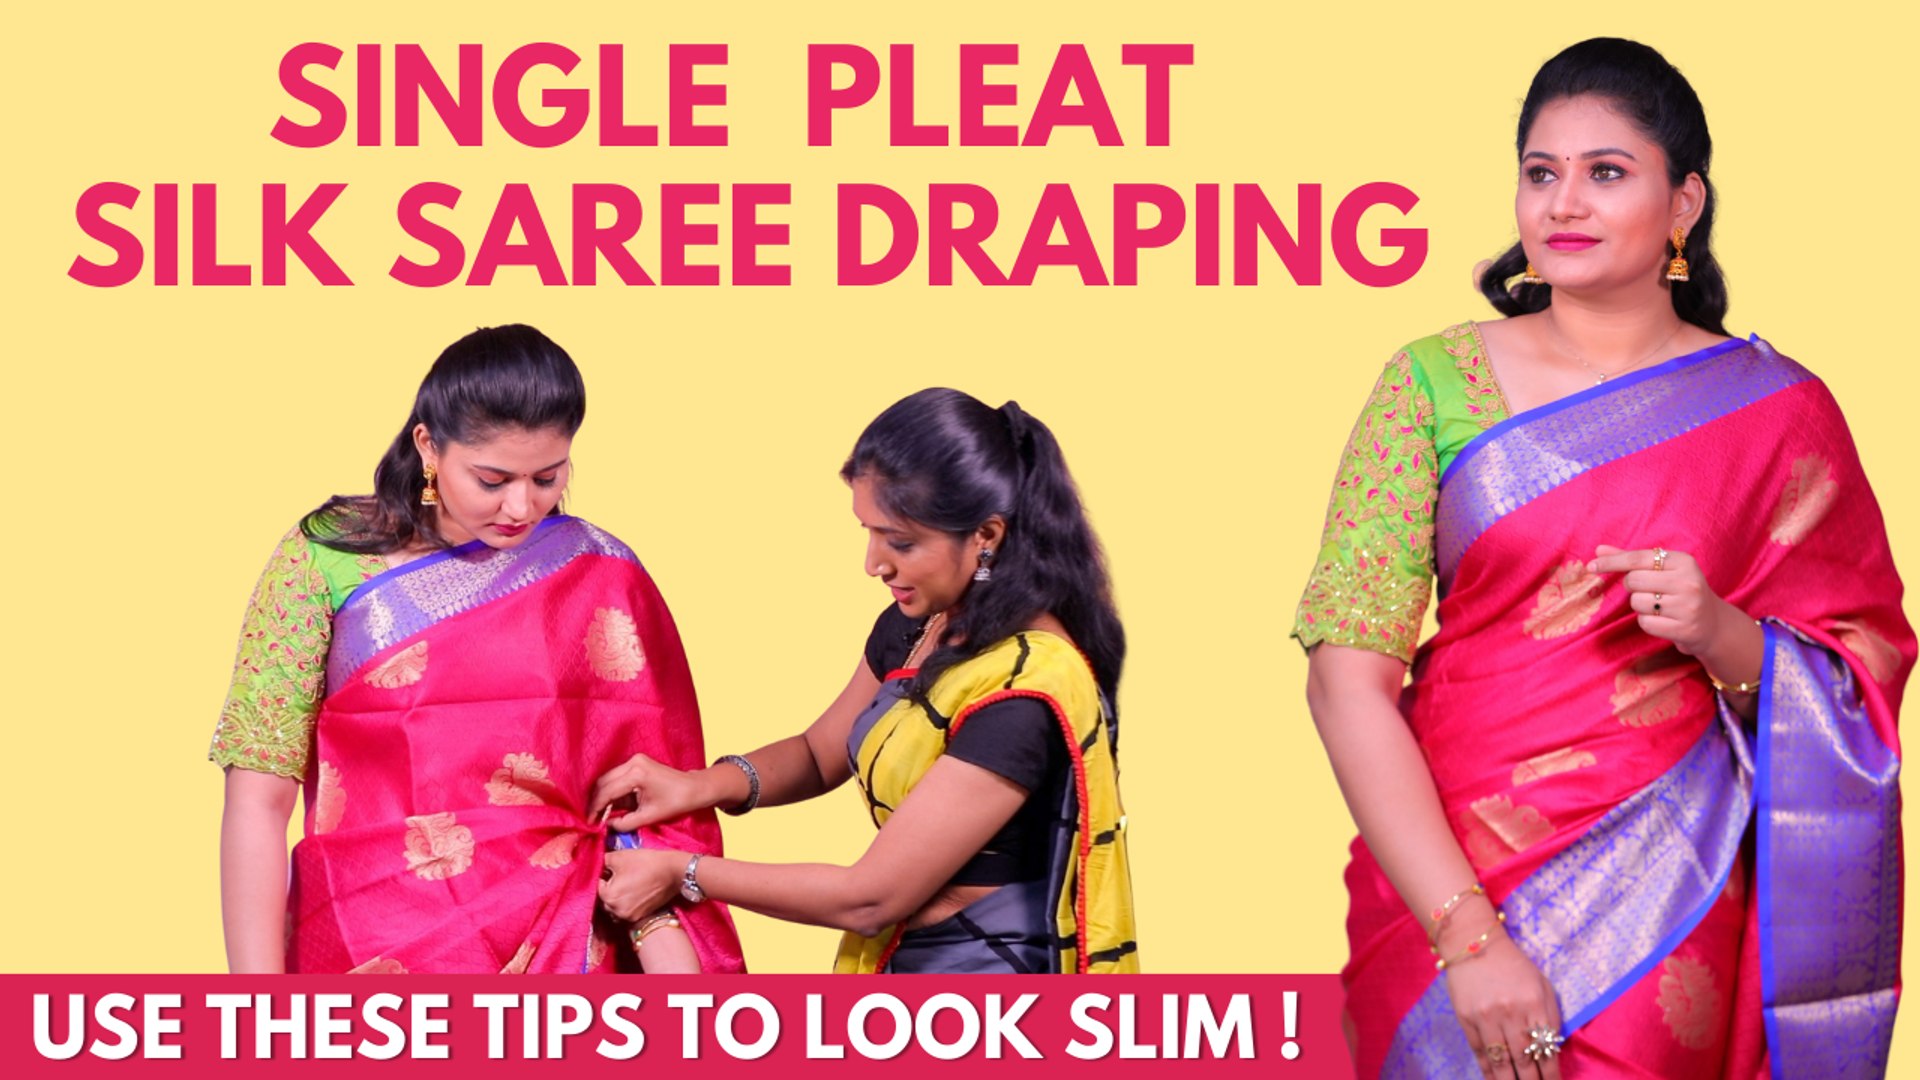 How To Drape Silk Saree in Single Pleat